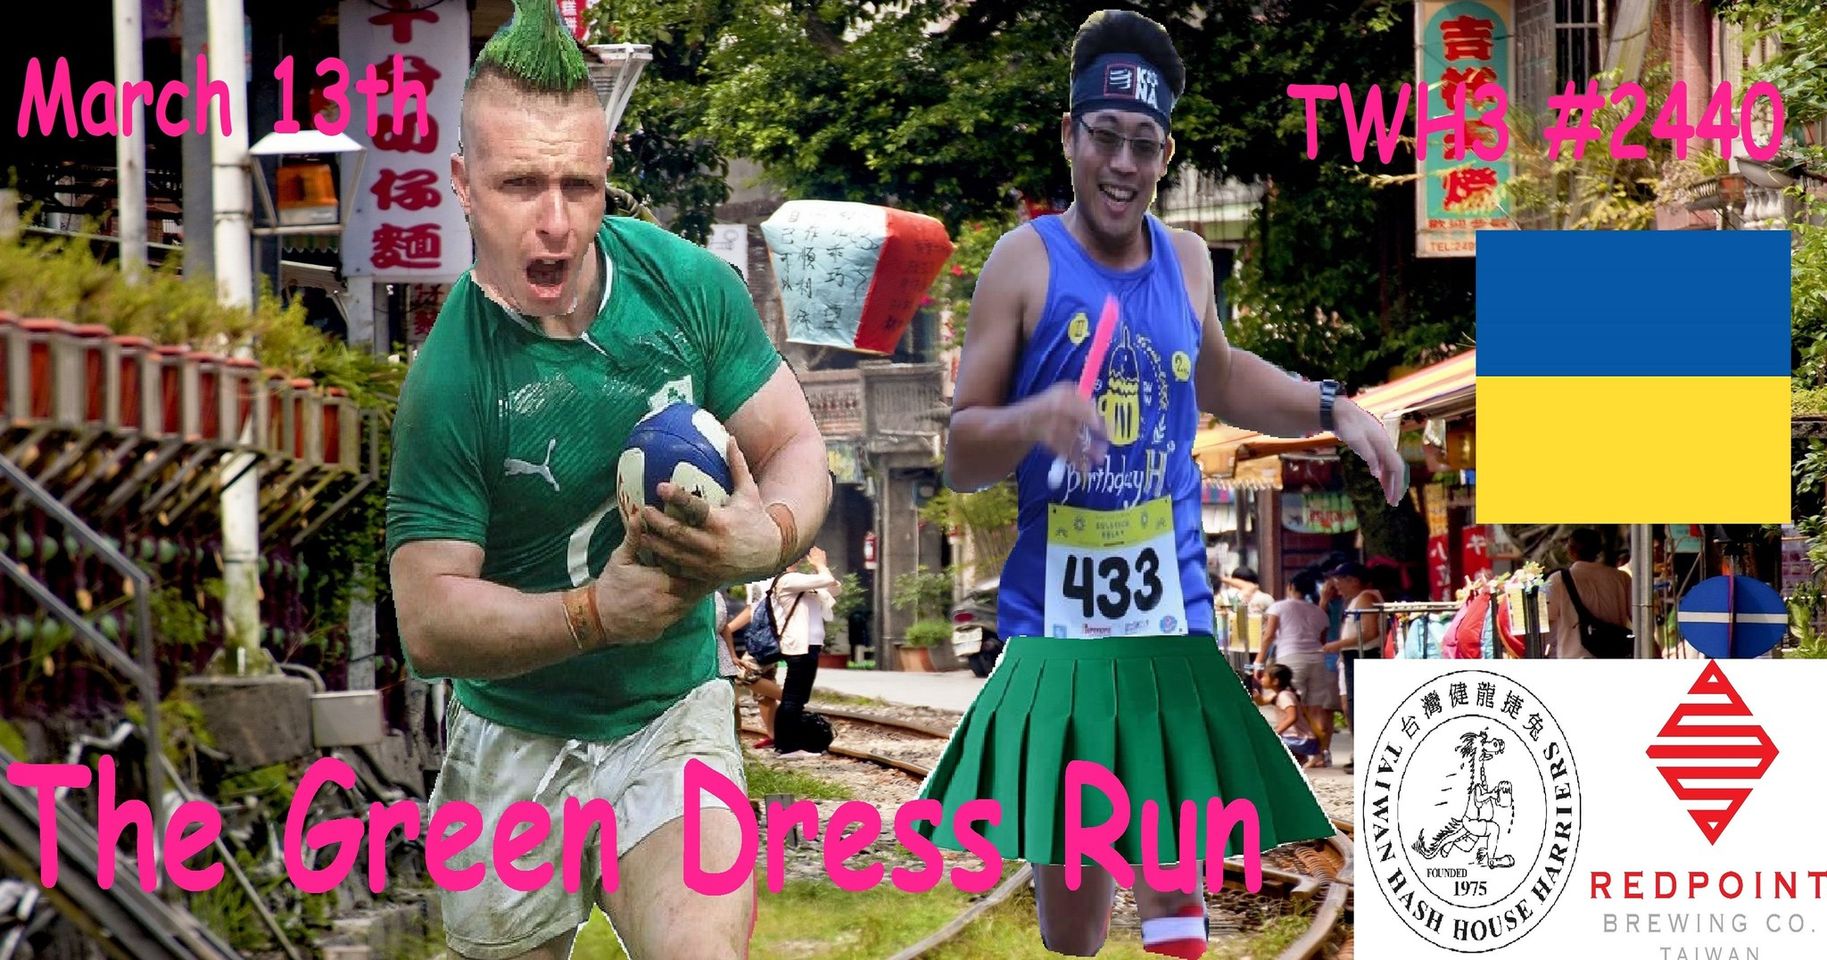 #2440 - The Green Dress Run